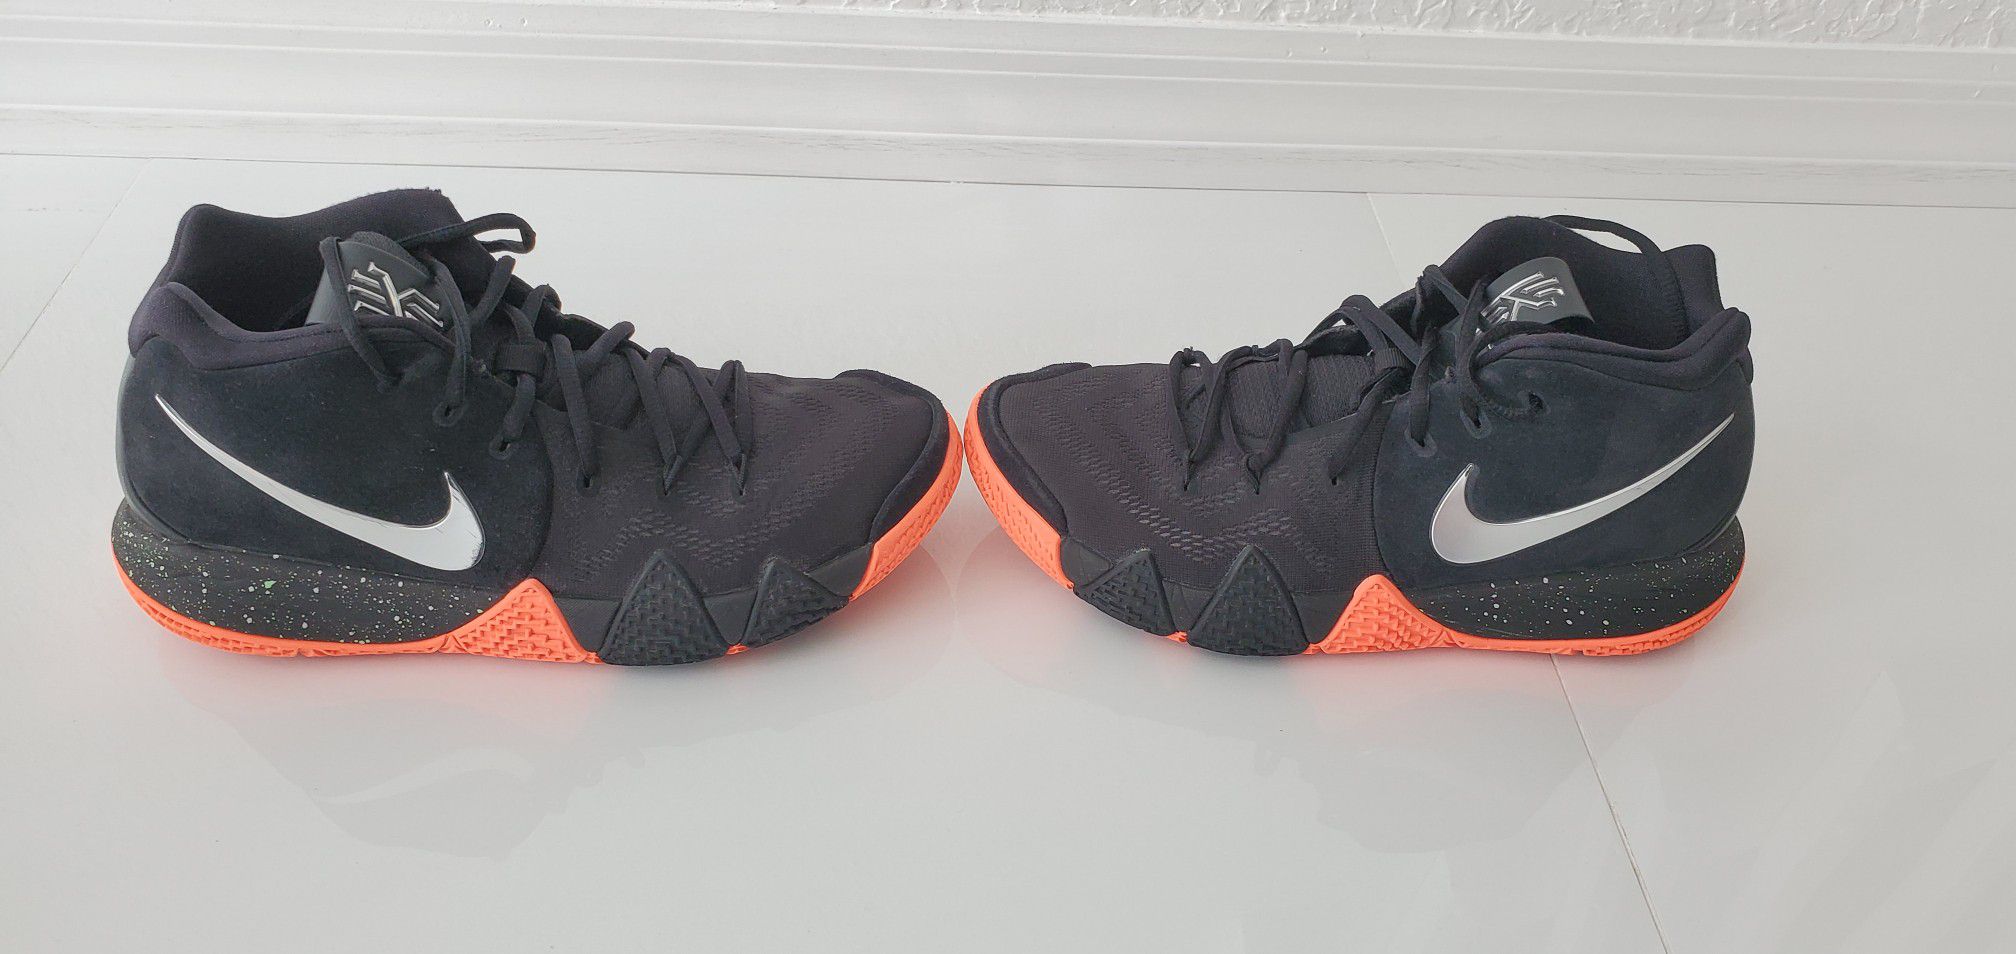 Nike Kyrie 4 Black/Metallic Silver Size 9 Basketball Shoes